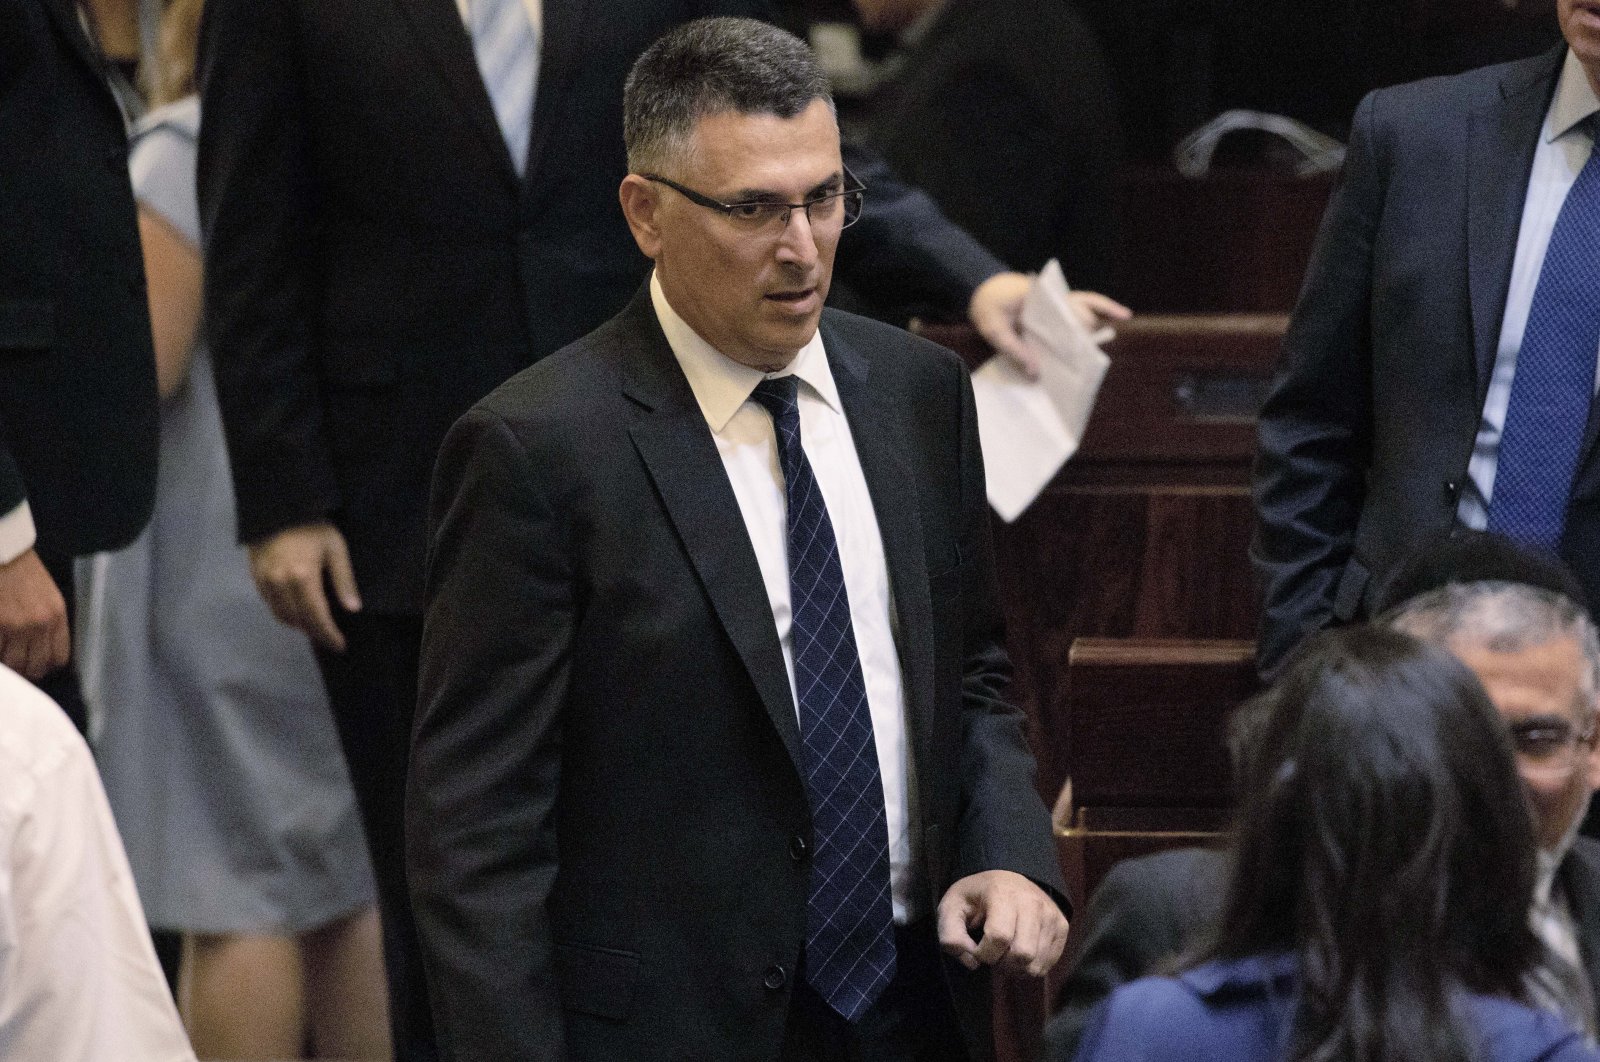 Gideon Saar attends the swearing-in of the new Israeli parliament, Jerusalem, Oct. 3, 2019. (AP Photo)